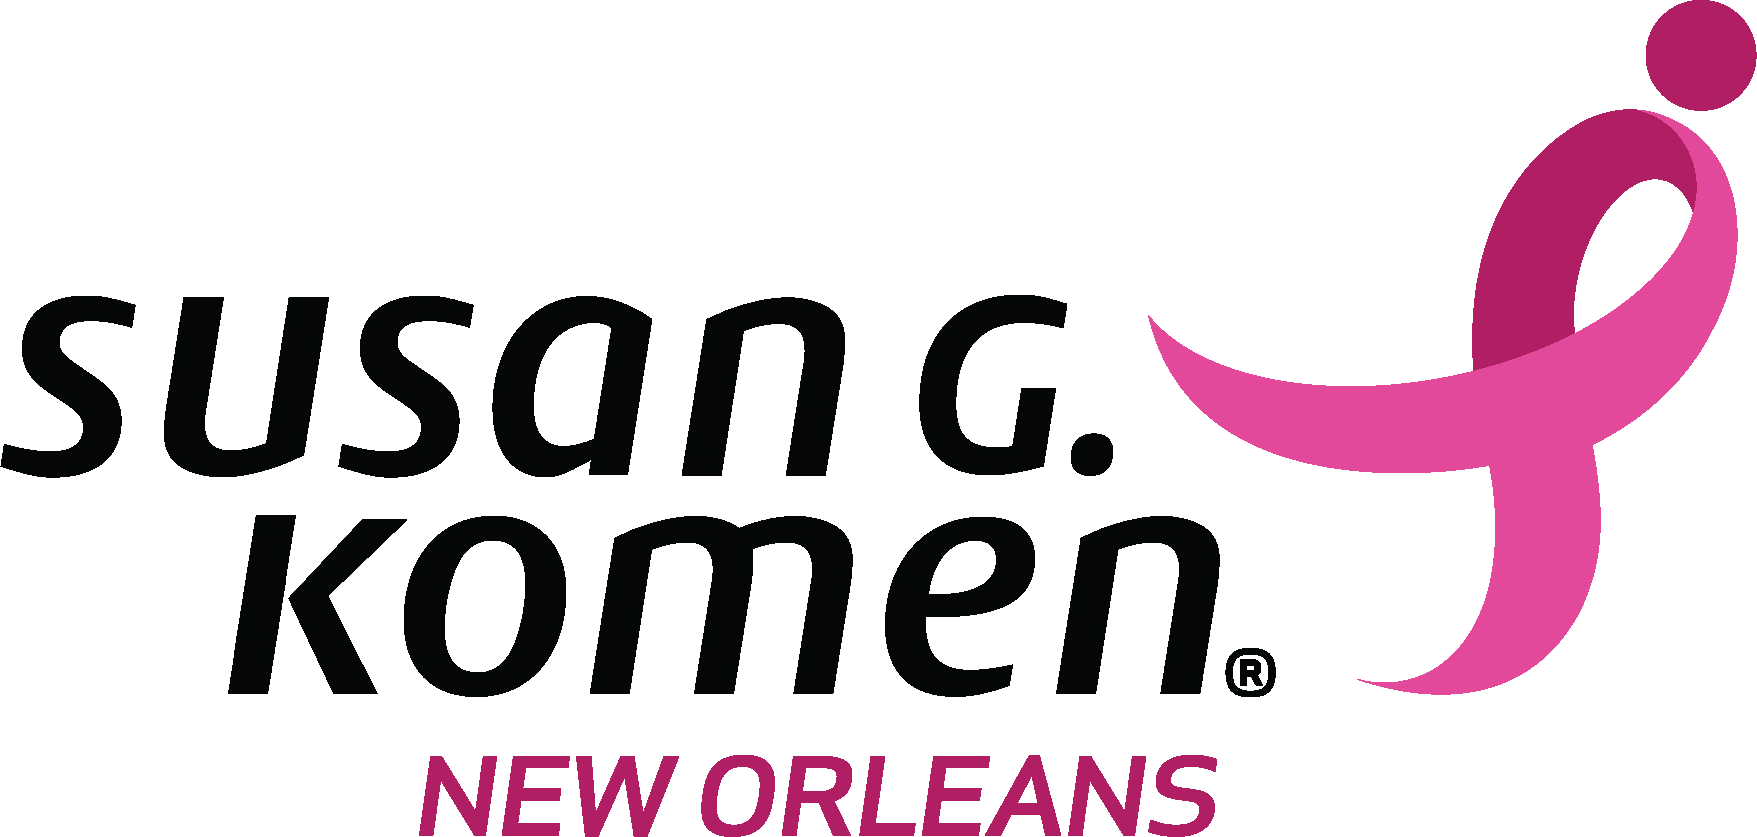 Susan G. Komen Foundation - New Orleans